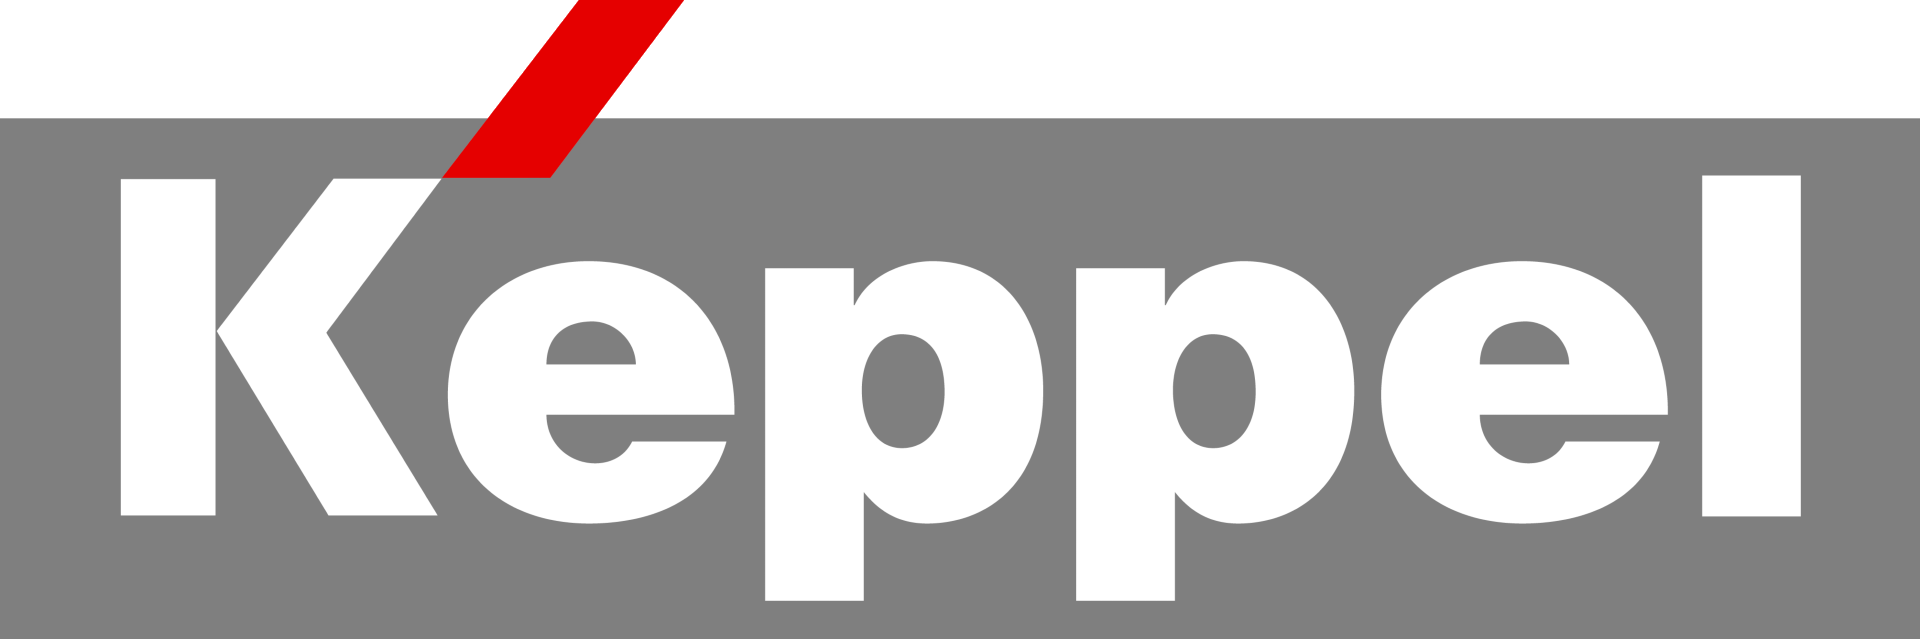 Keppel logo.png